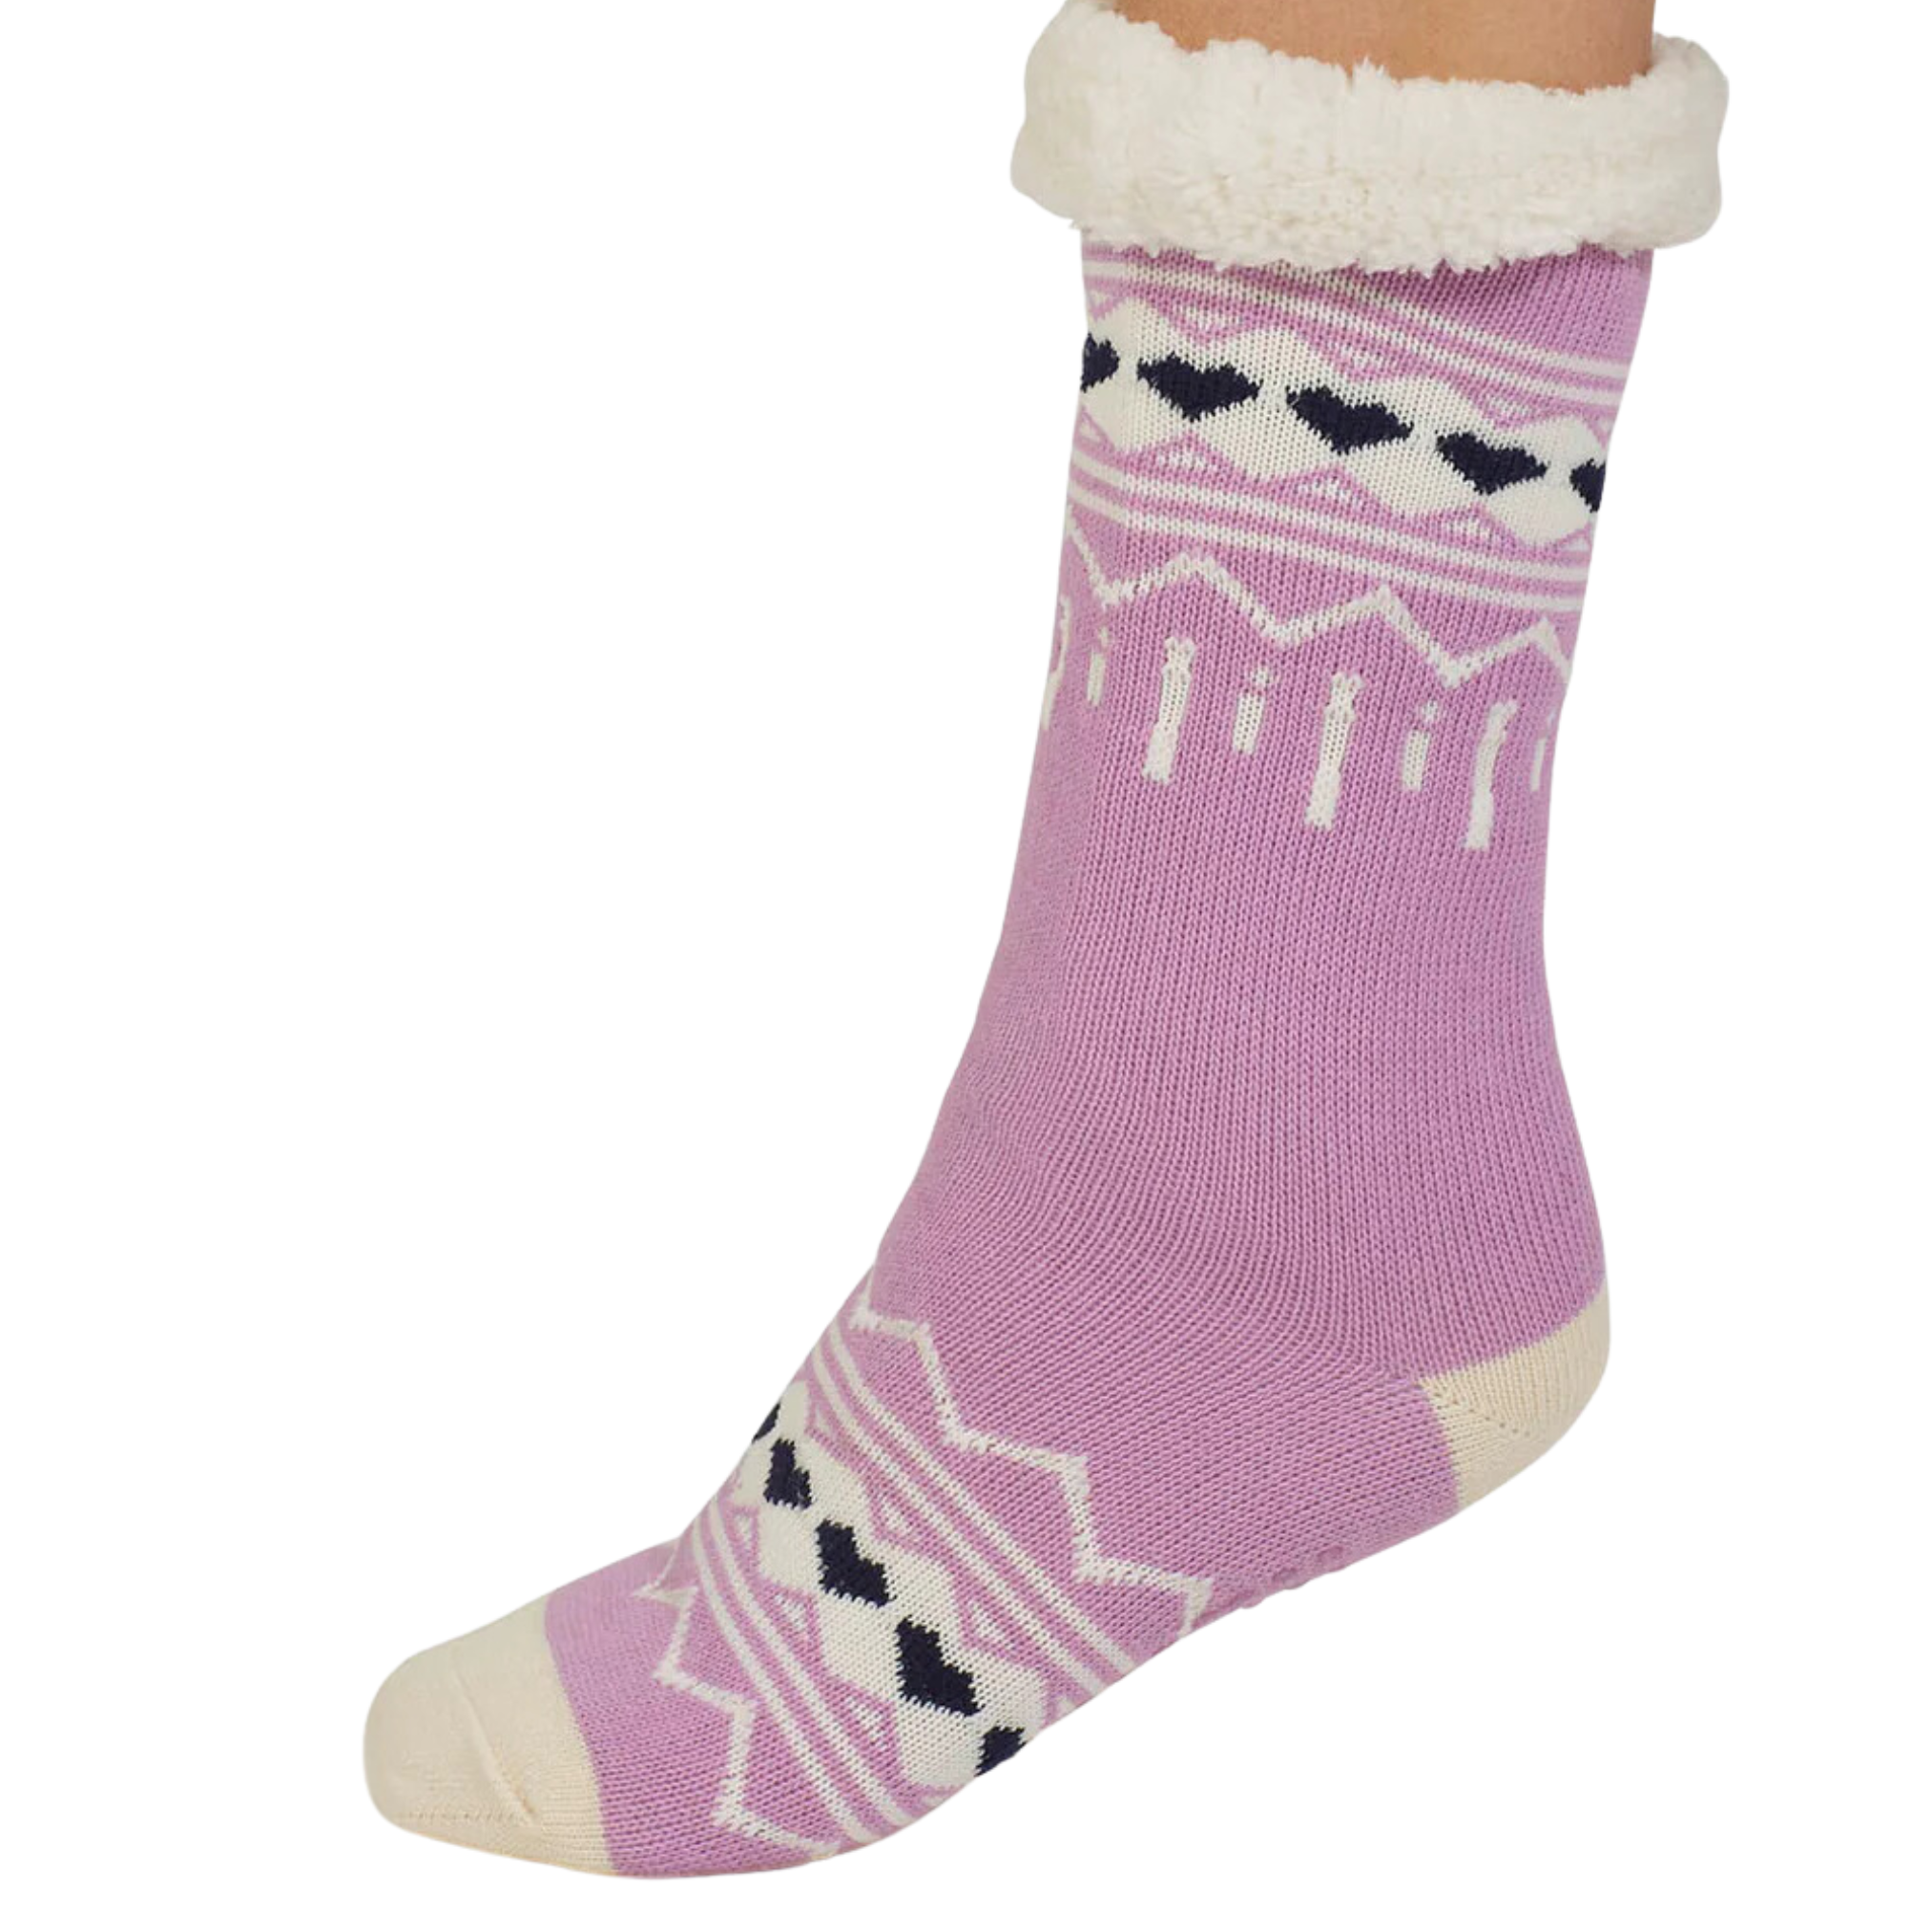 Ilah Fair Isle Slipper Socks (Women's) - 0